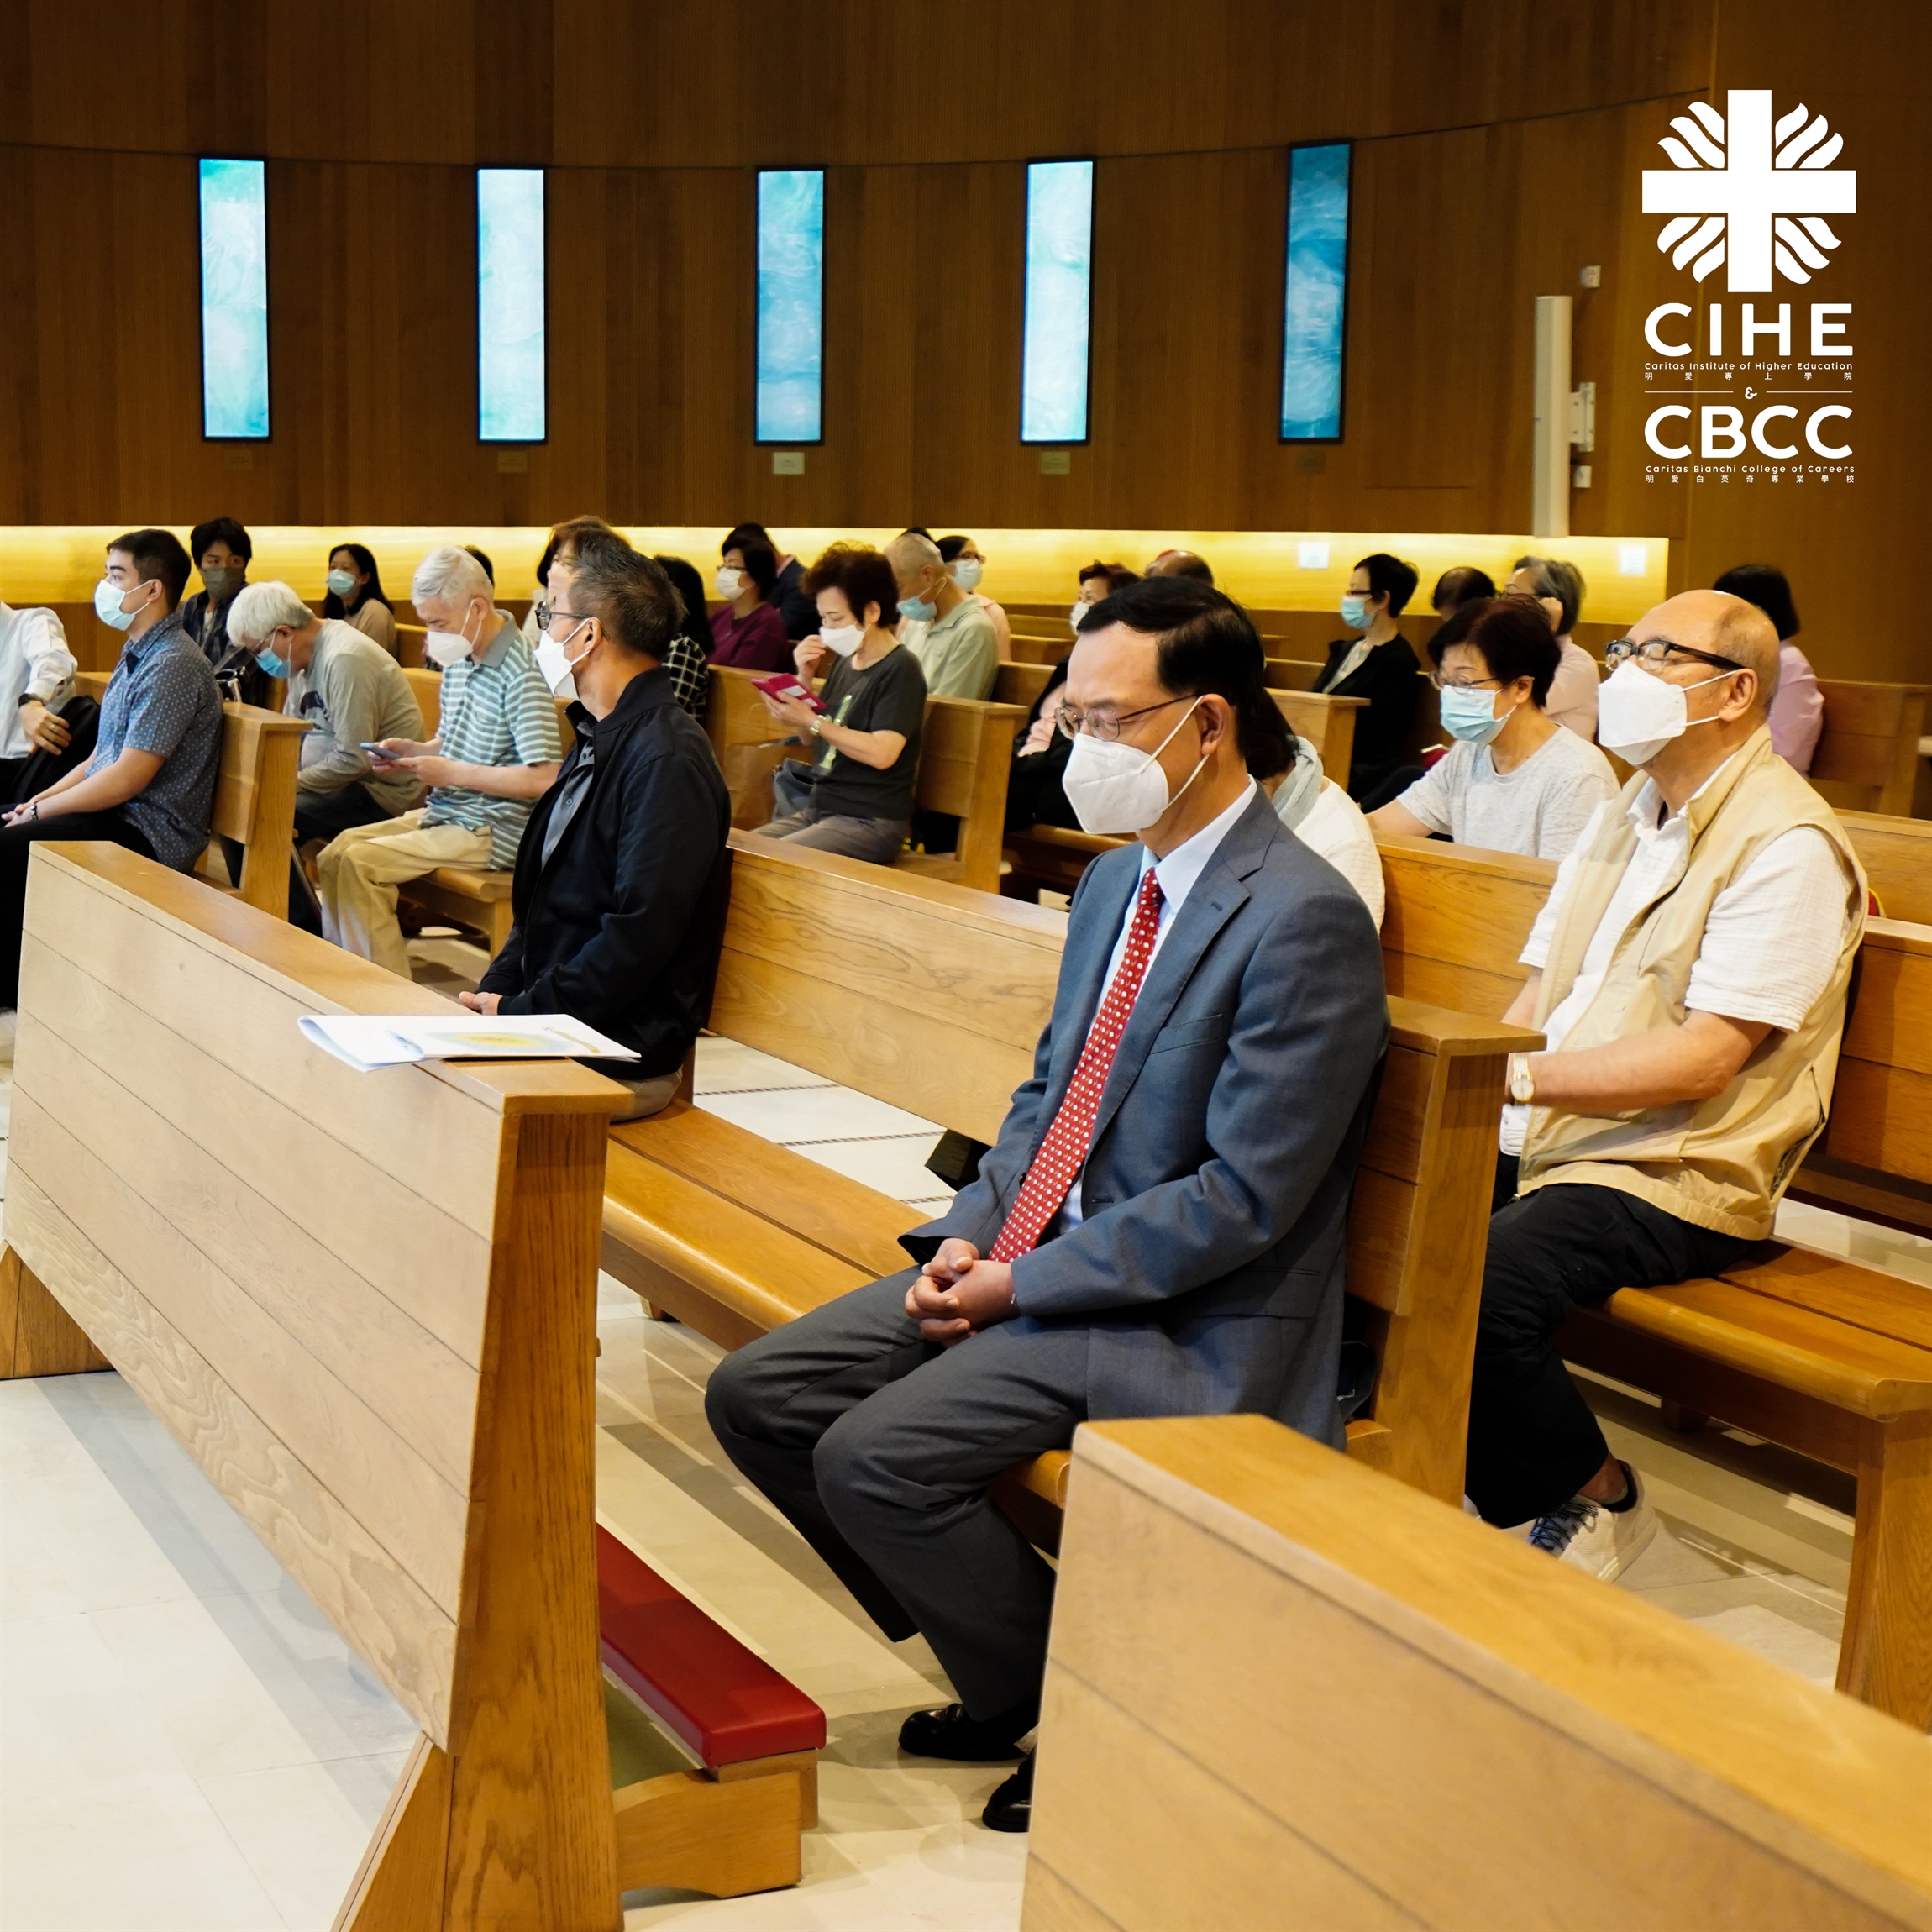 Rev. Joseph Yim conducted the School Year Opening Mass of CIHE